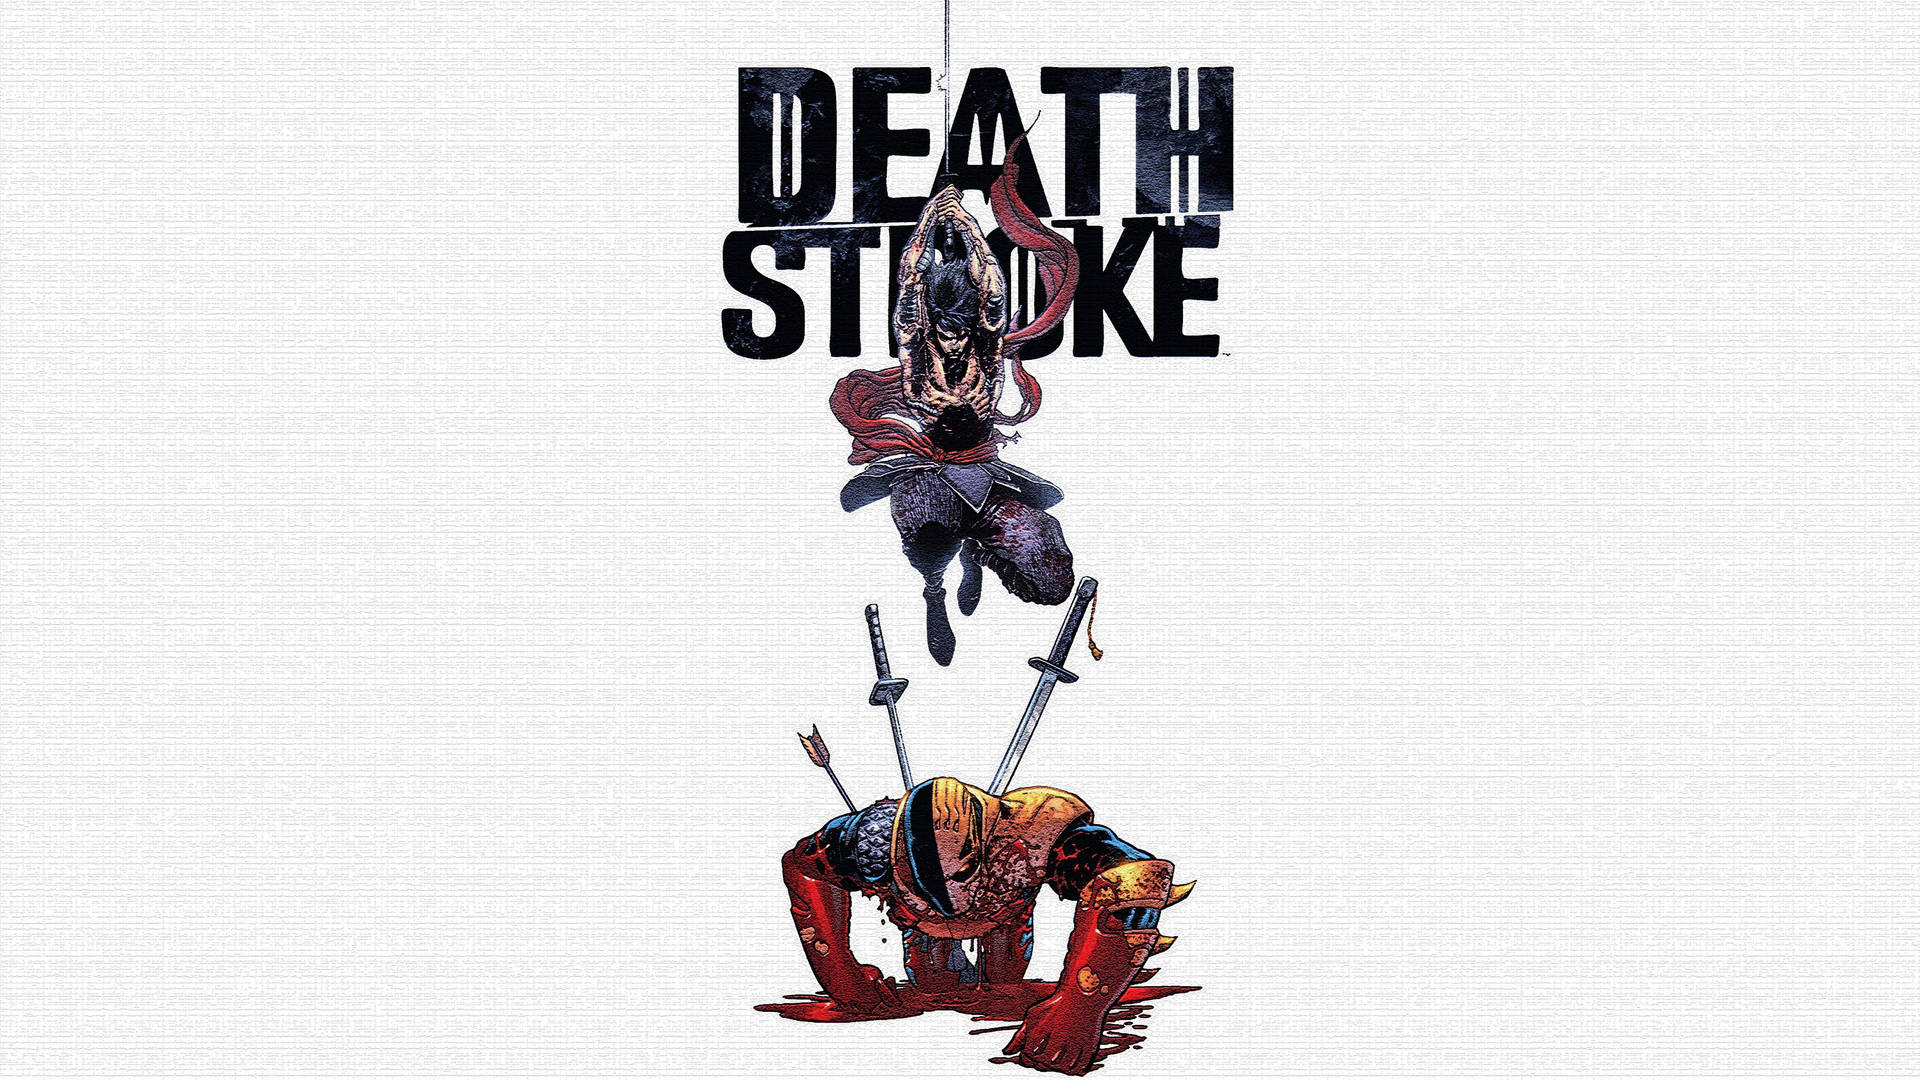 Death Stroke - A Comic Book Cover Background